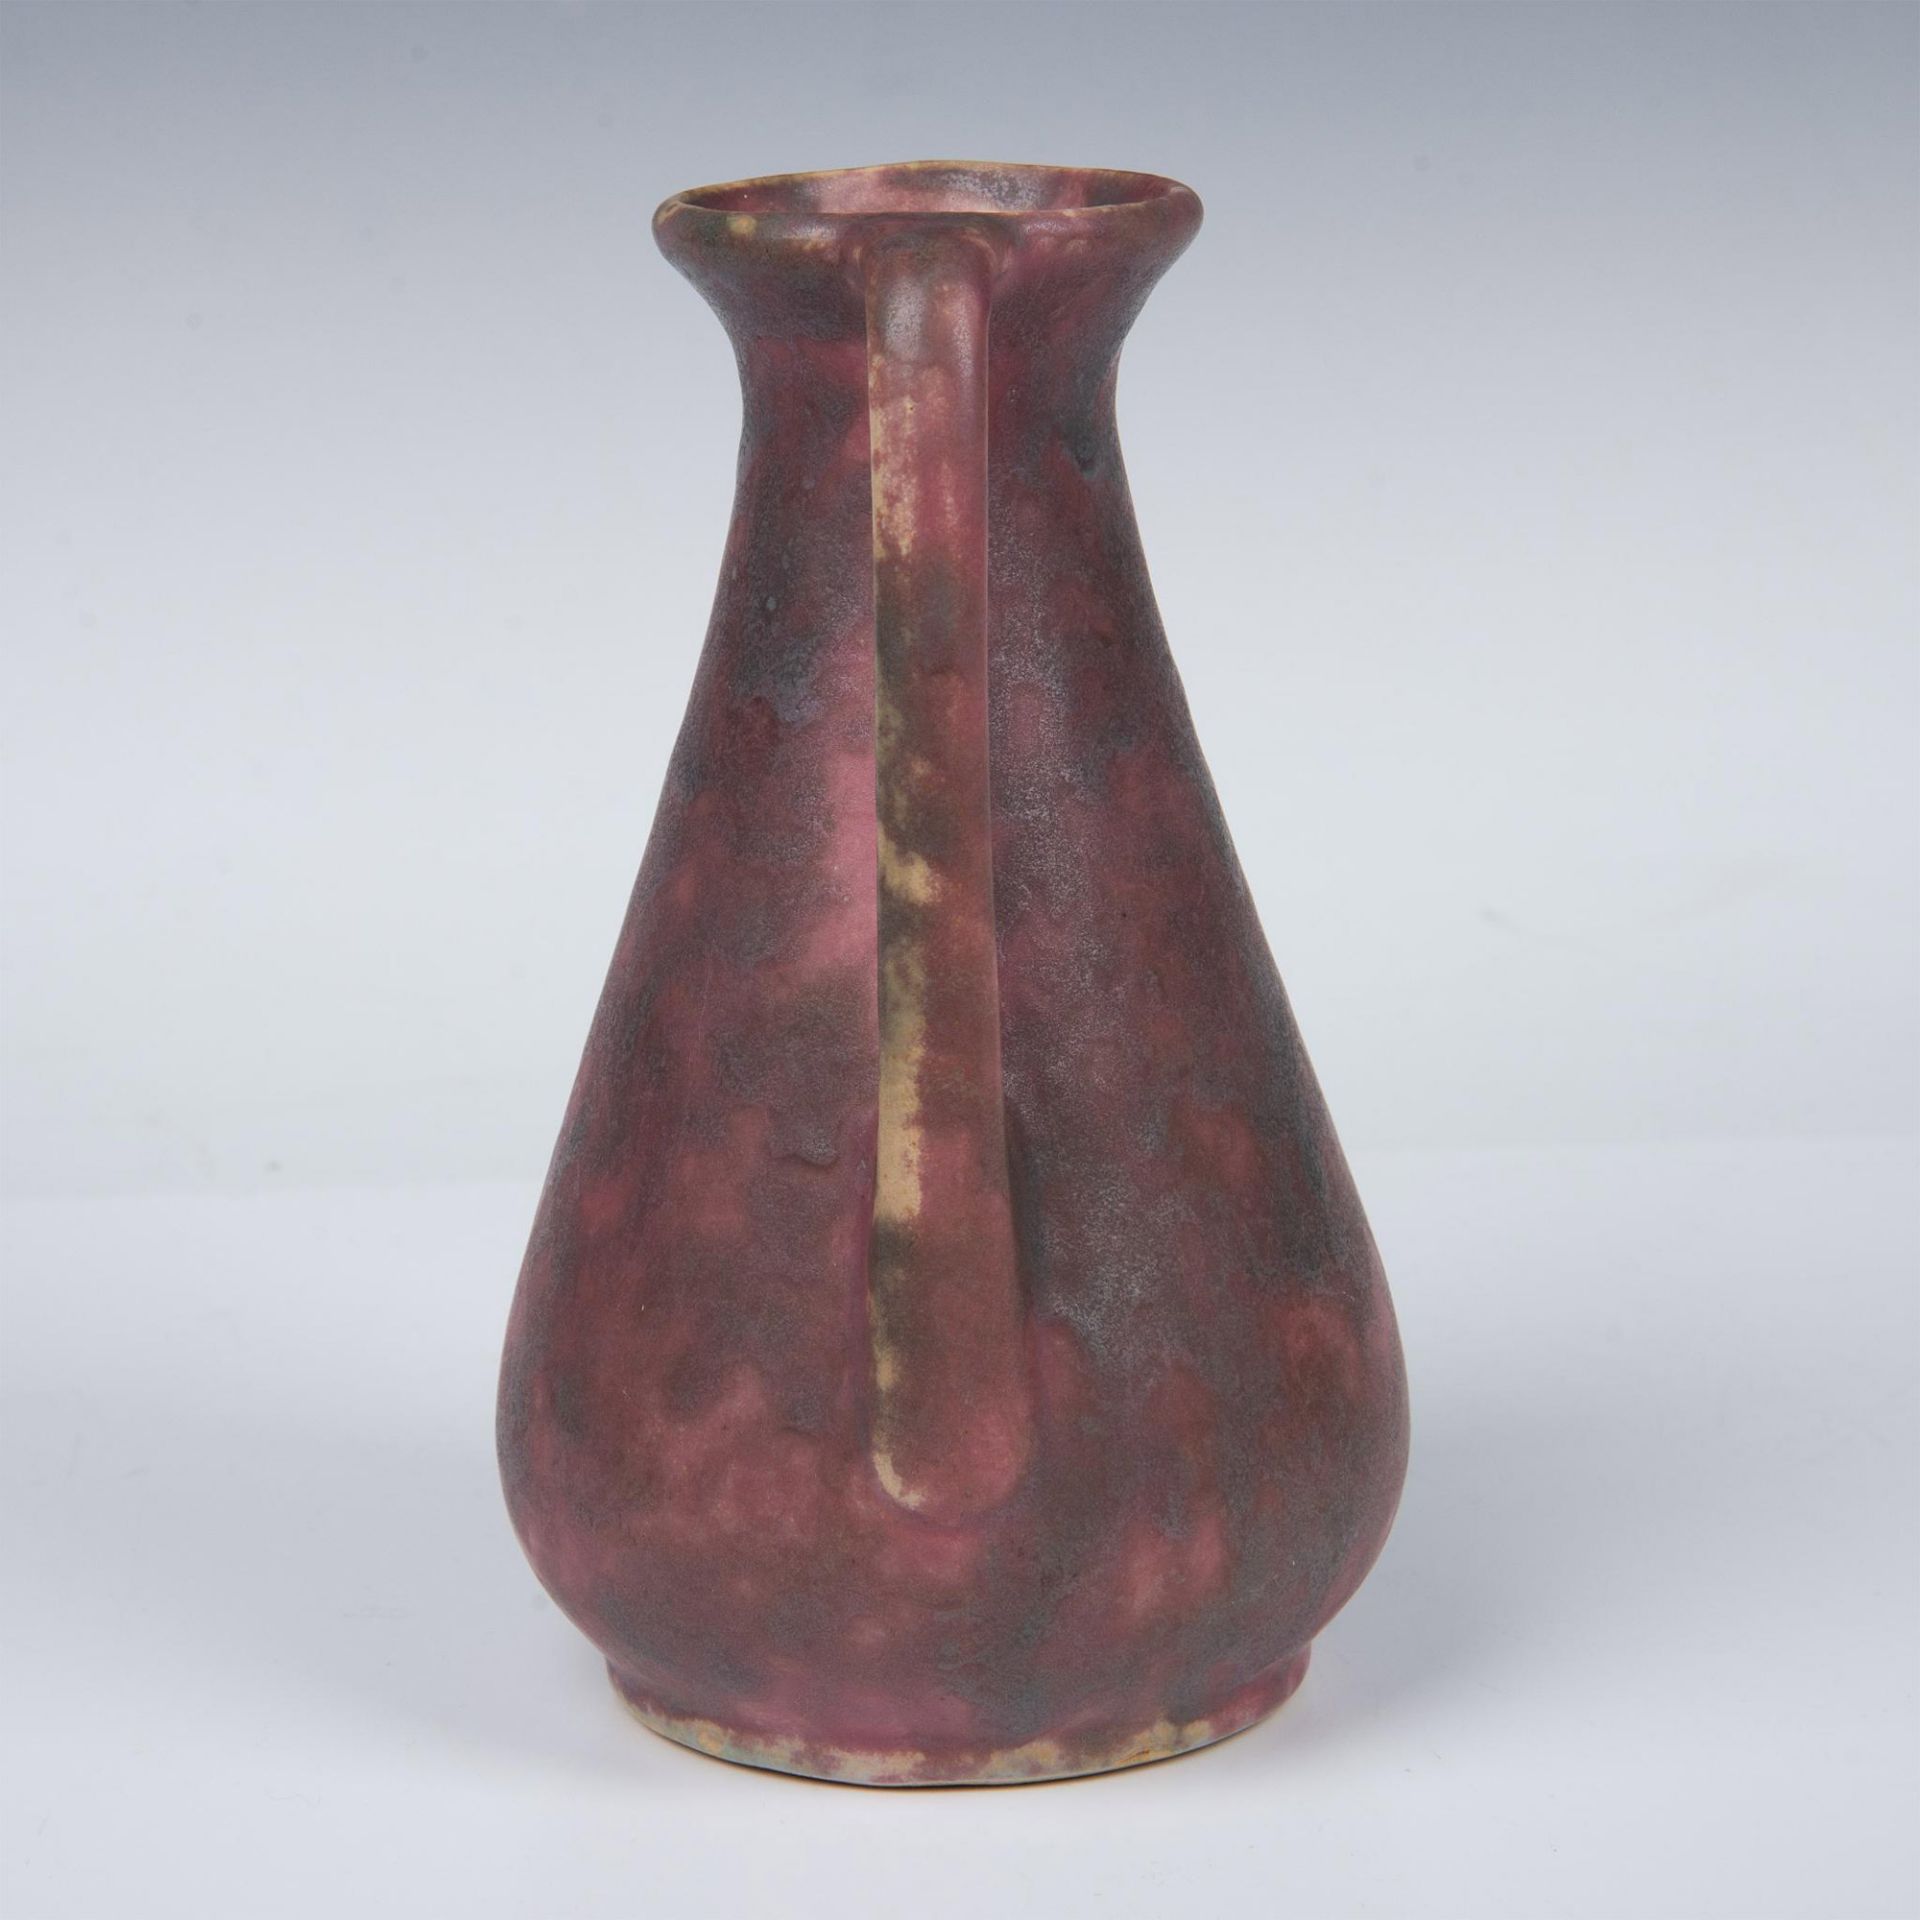 Art Nouveau Arts and Crafts Pottery Mottled Mauve Pink Vase - Image 2 of 5